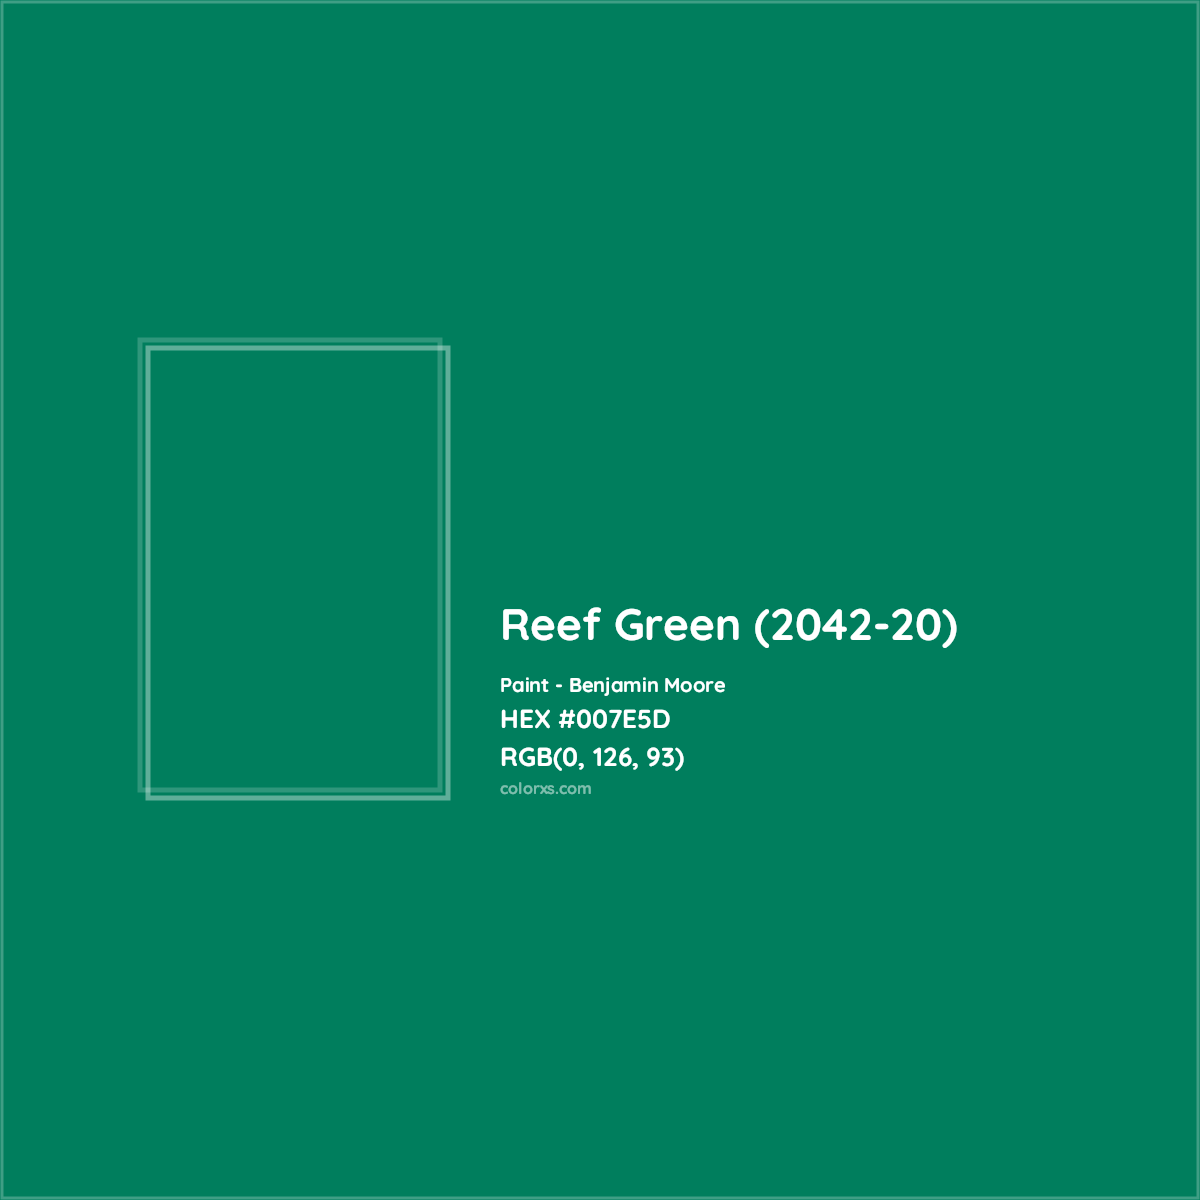 HEX #007E5D Reef Green (2042-20) Paint Benjamin Moore - Color Code